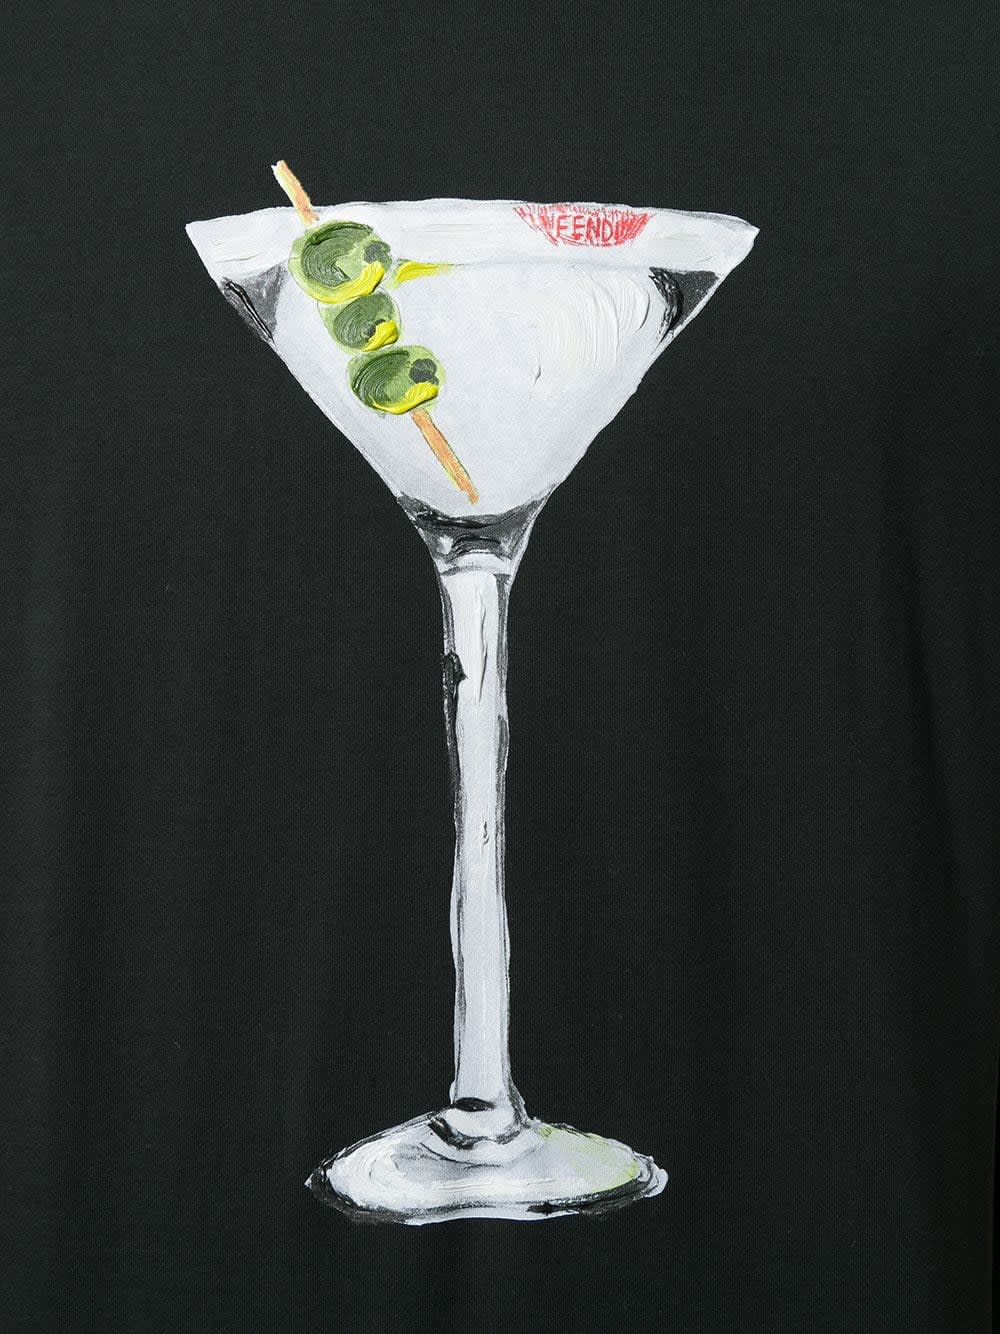  Fendi , Black Martini Printed T-shirt 